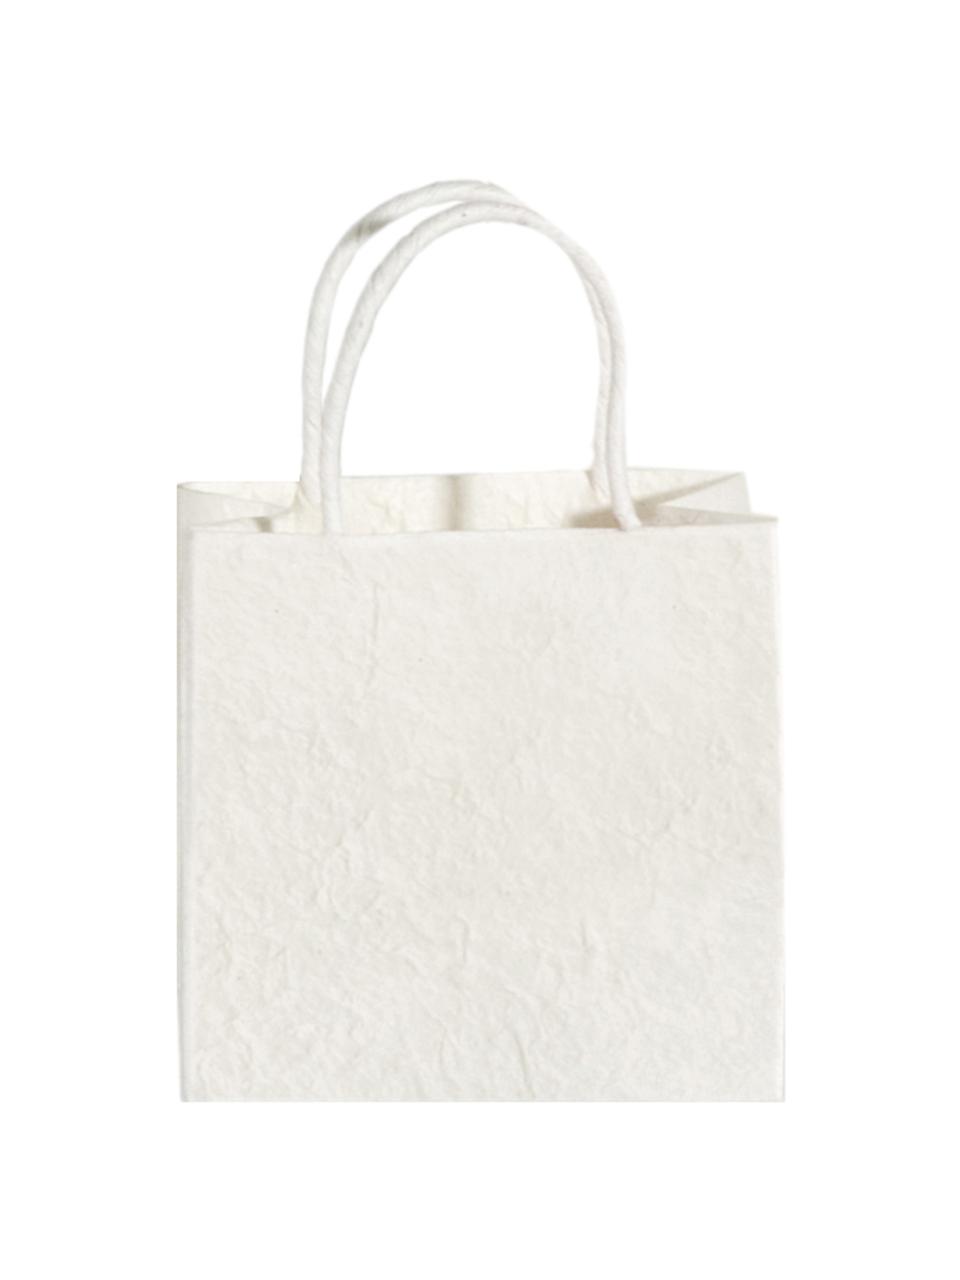 Dárková taška Will, 3 ks, Papír, Krémově bílá, Š 20 cm, V 20 cm